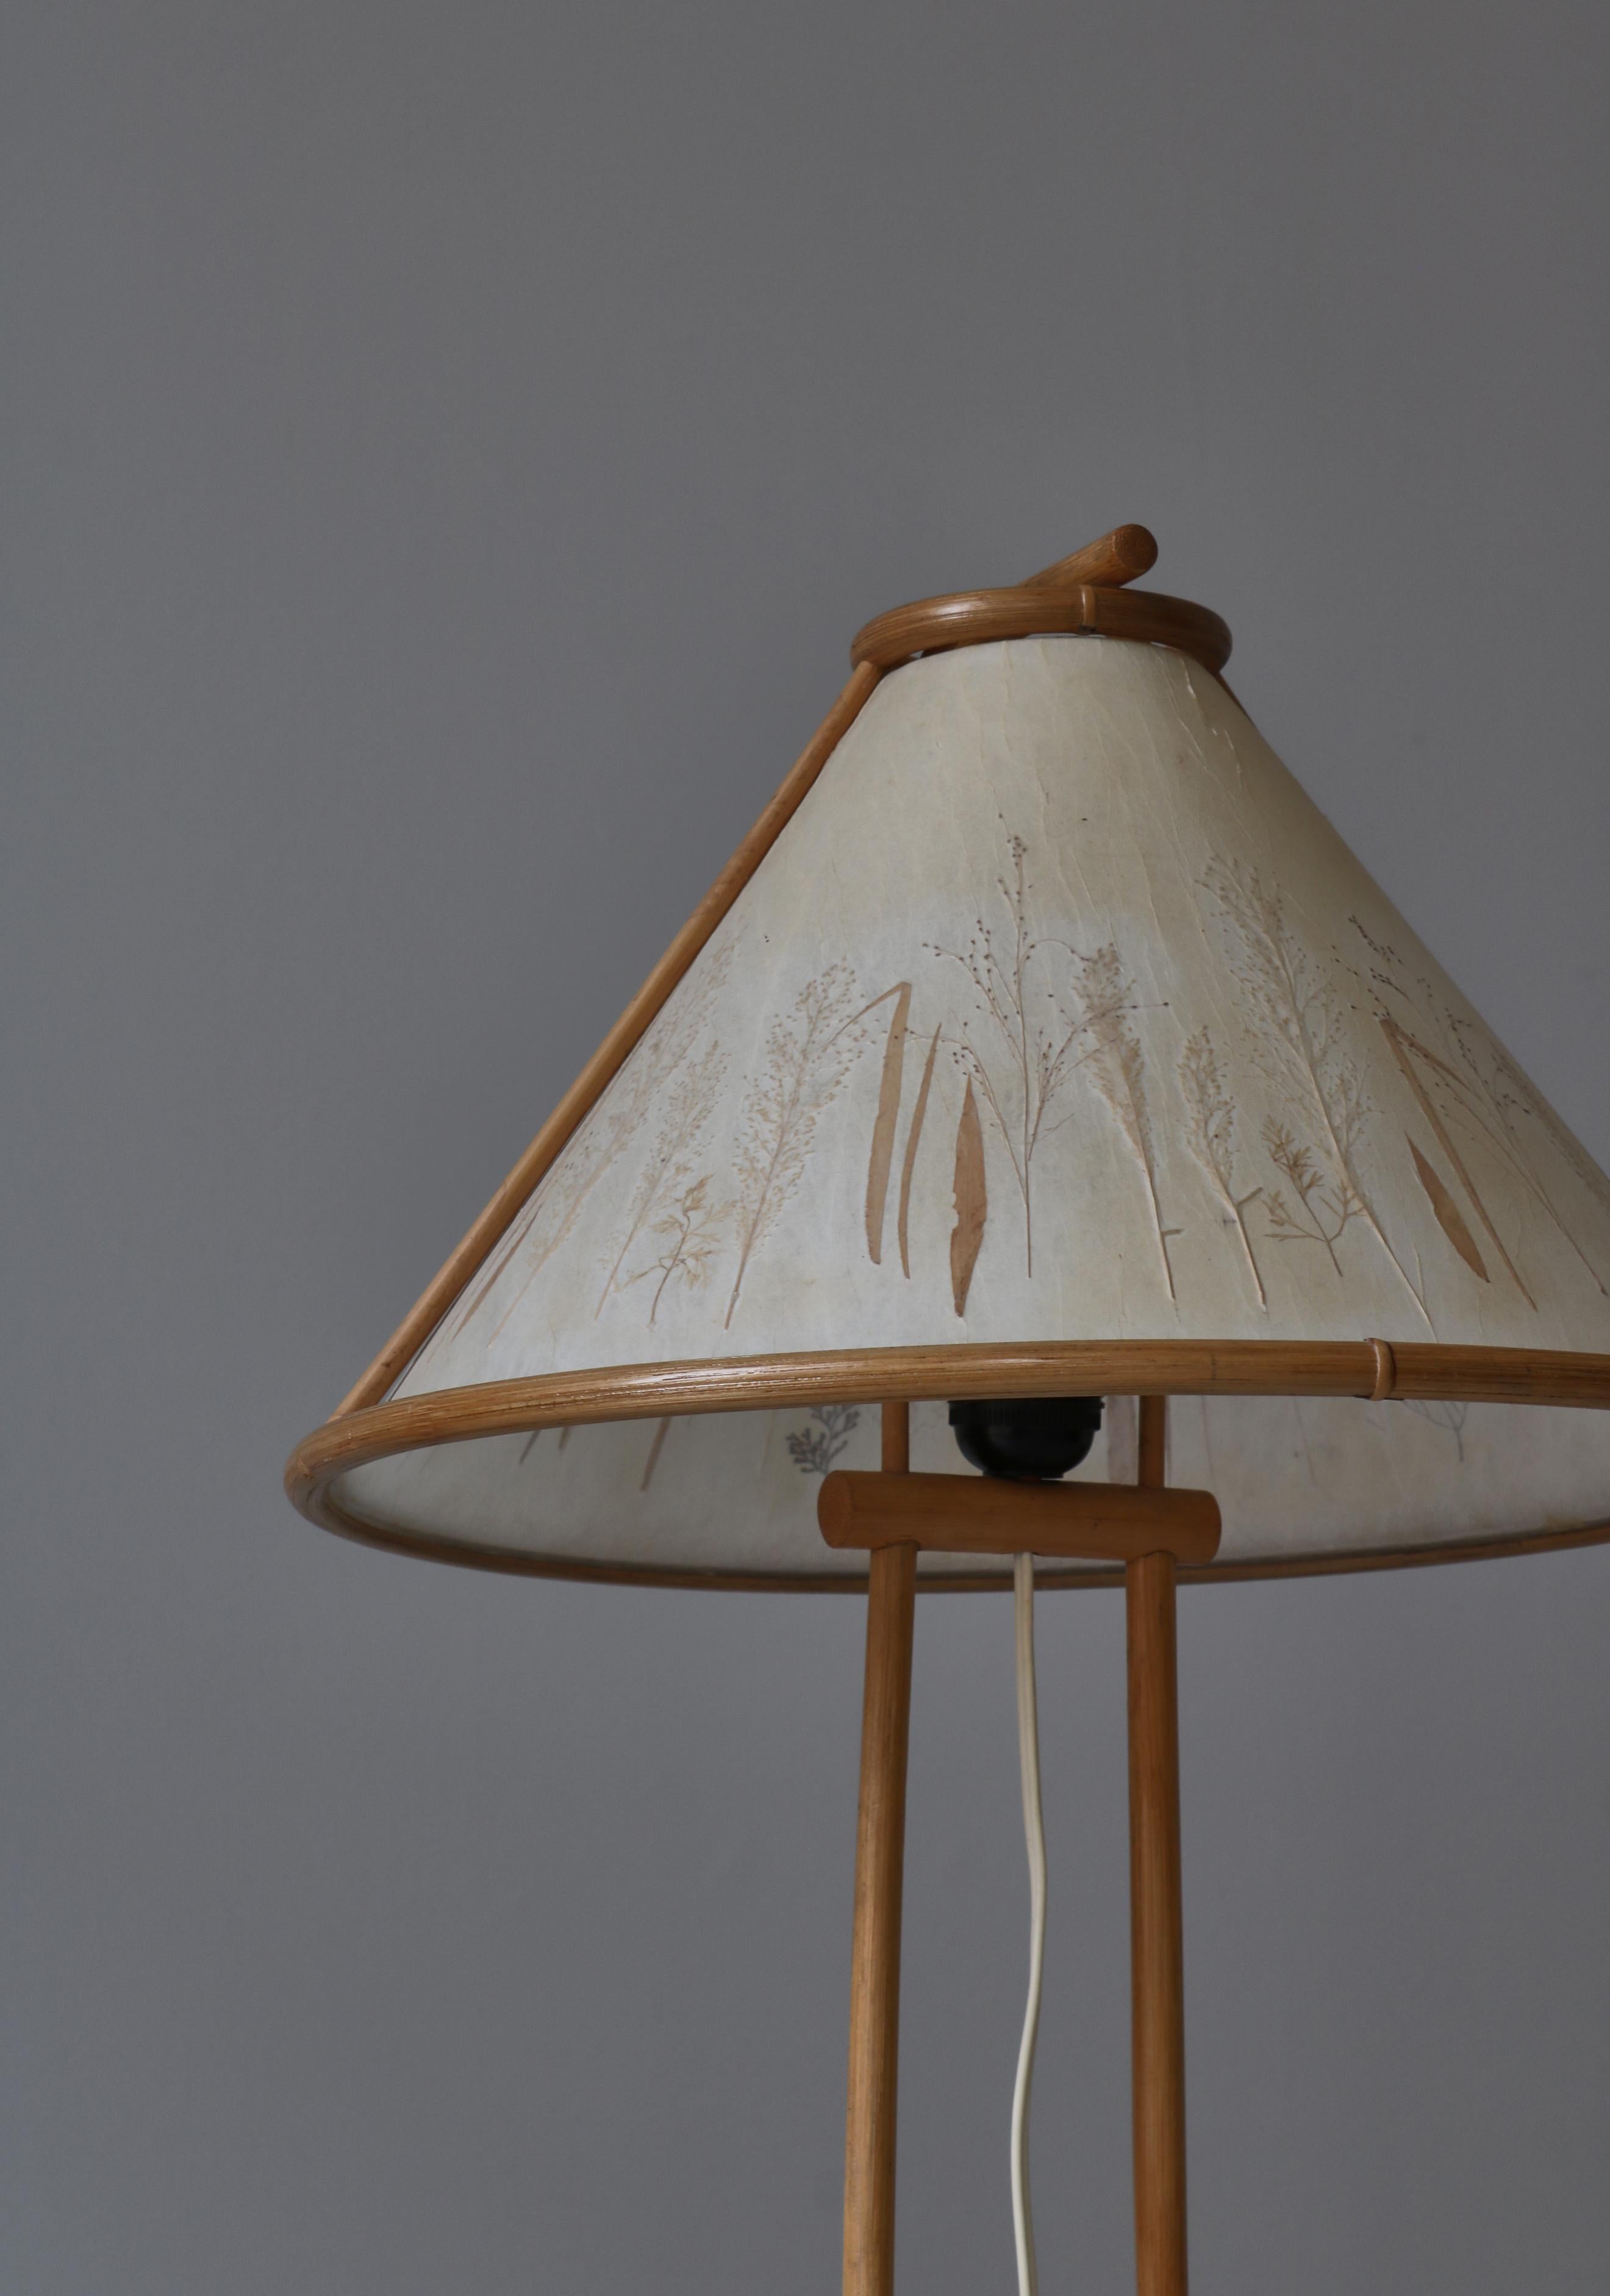 Danish Scandinavian Wabi-Sabi Bamboo Table Lamp Shade with Pressed Plants, 1950s For Sale